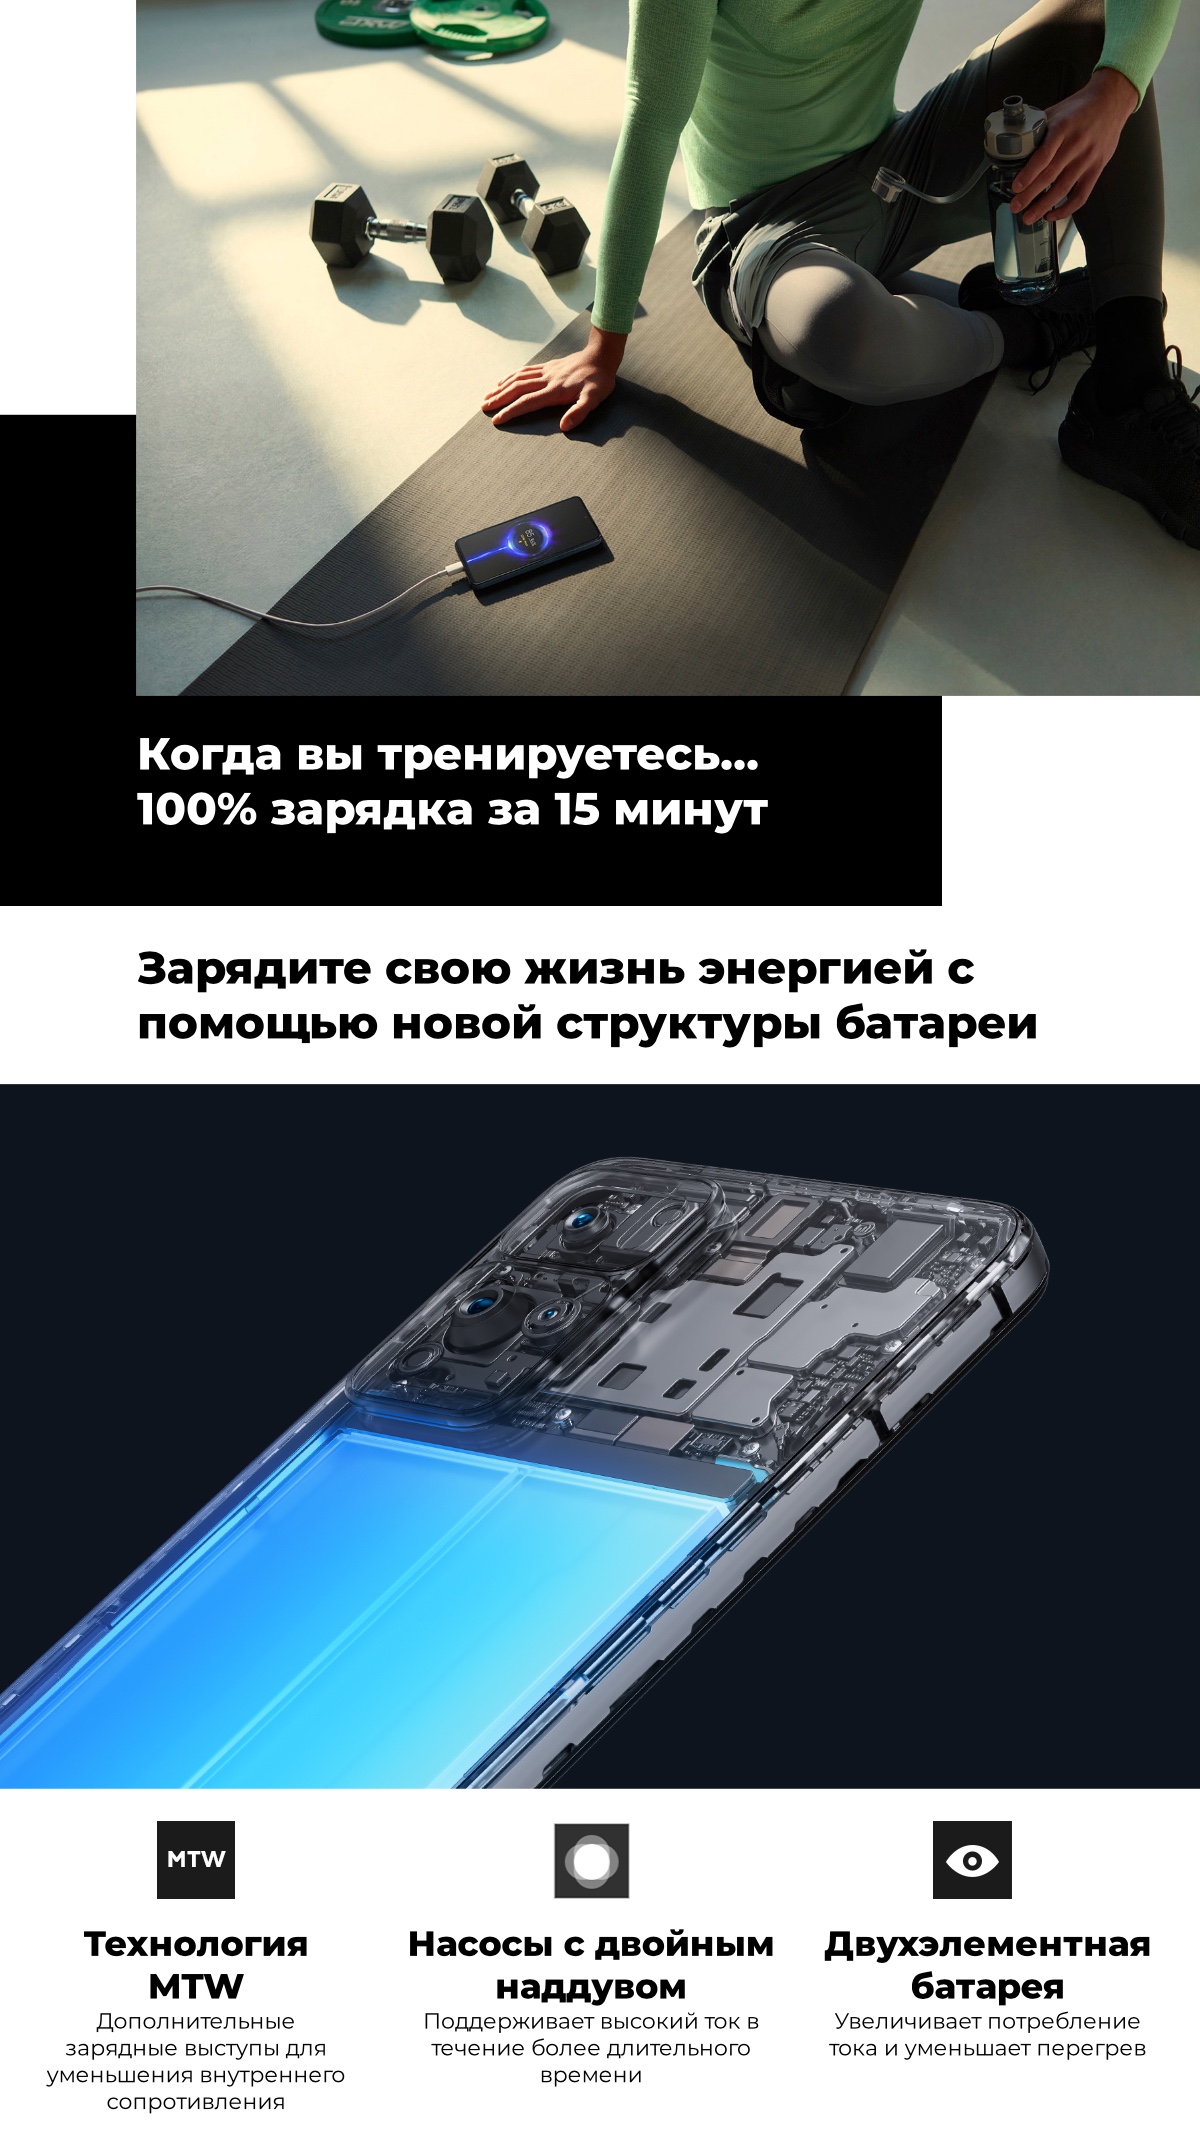 Смартфон Redmi Note 11 Pro Plus 5G 6/128Gb Graphite Grey Global